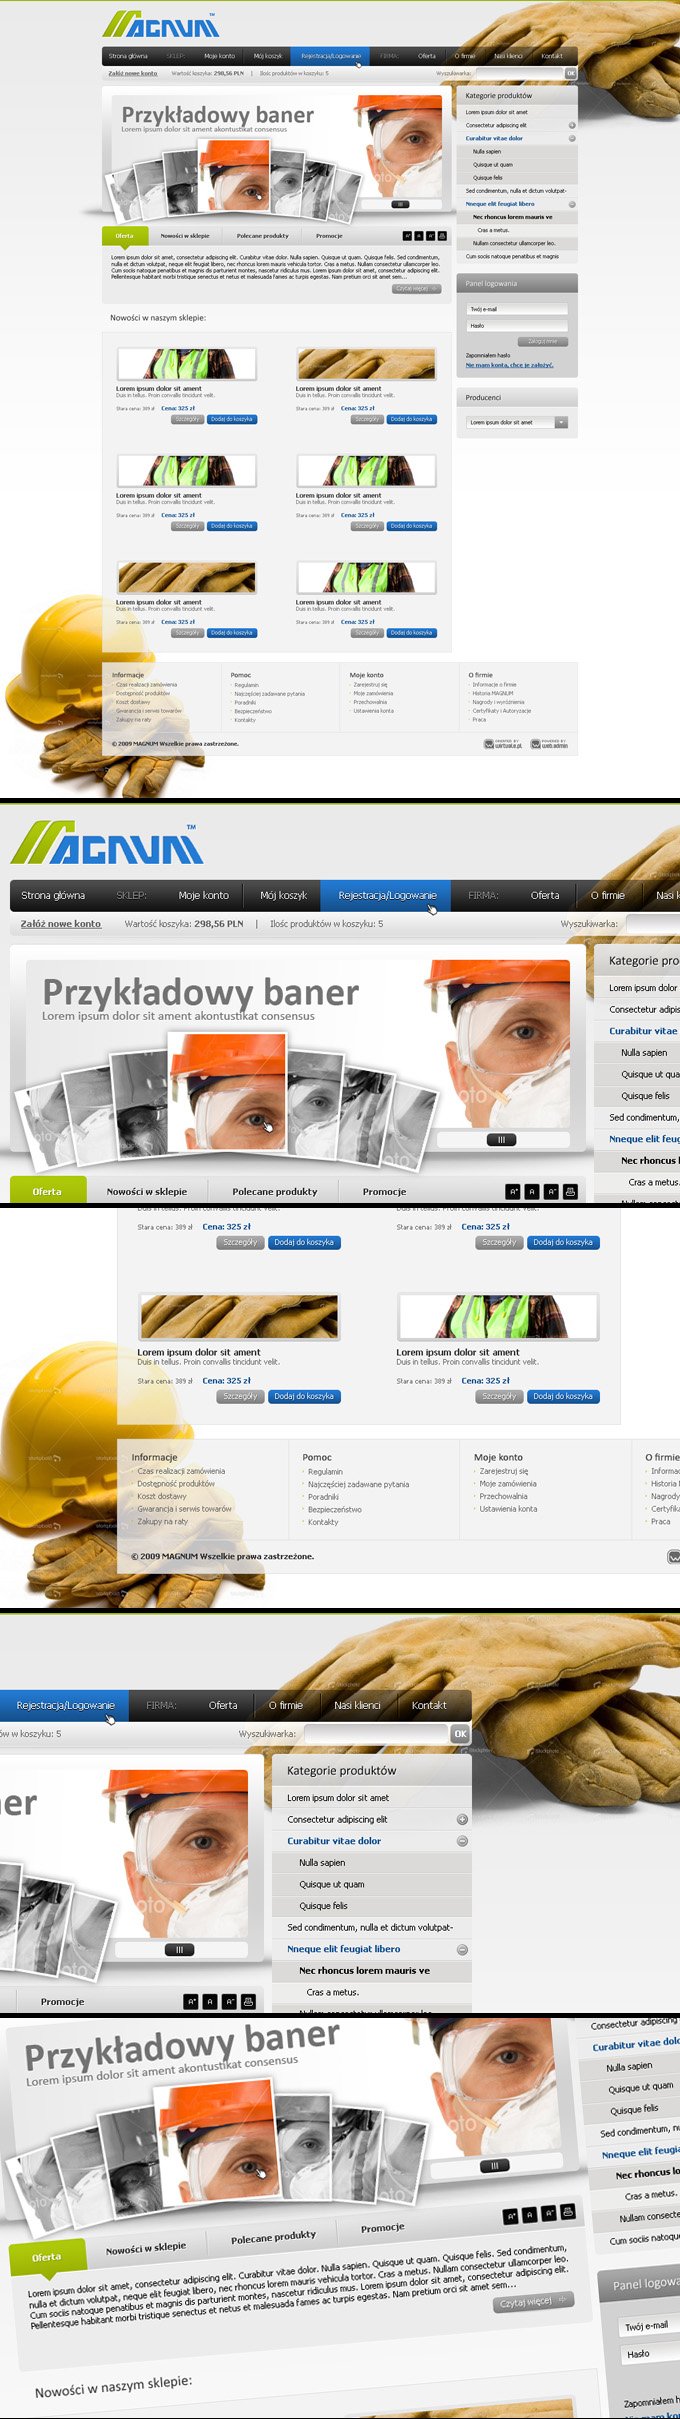 Lukasz Dach网站界面设计作品